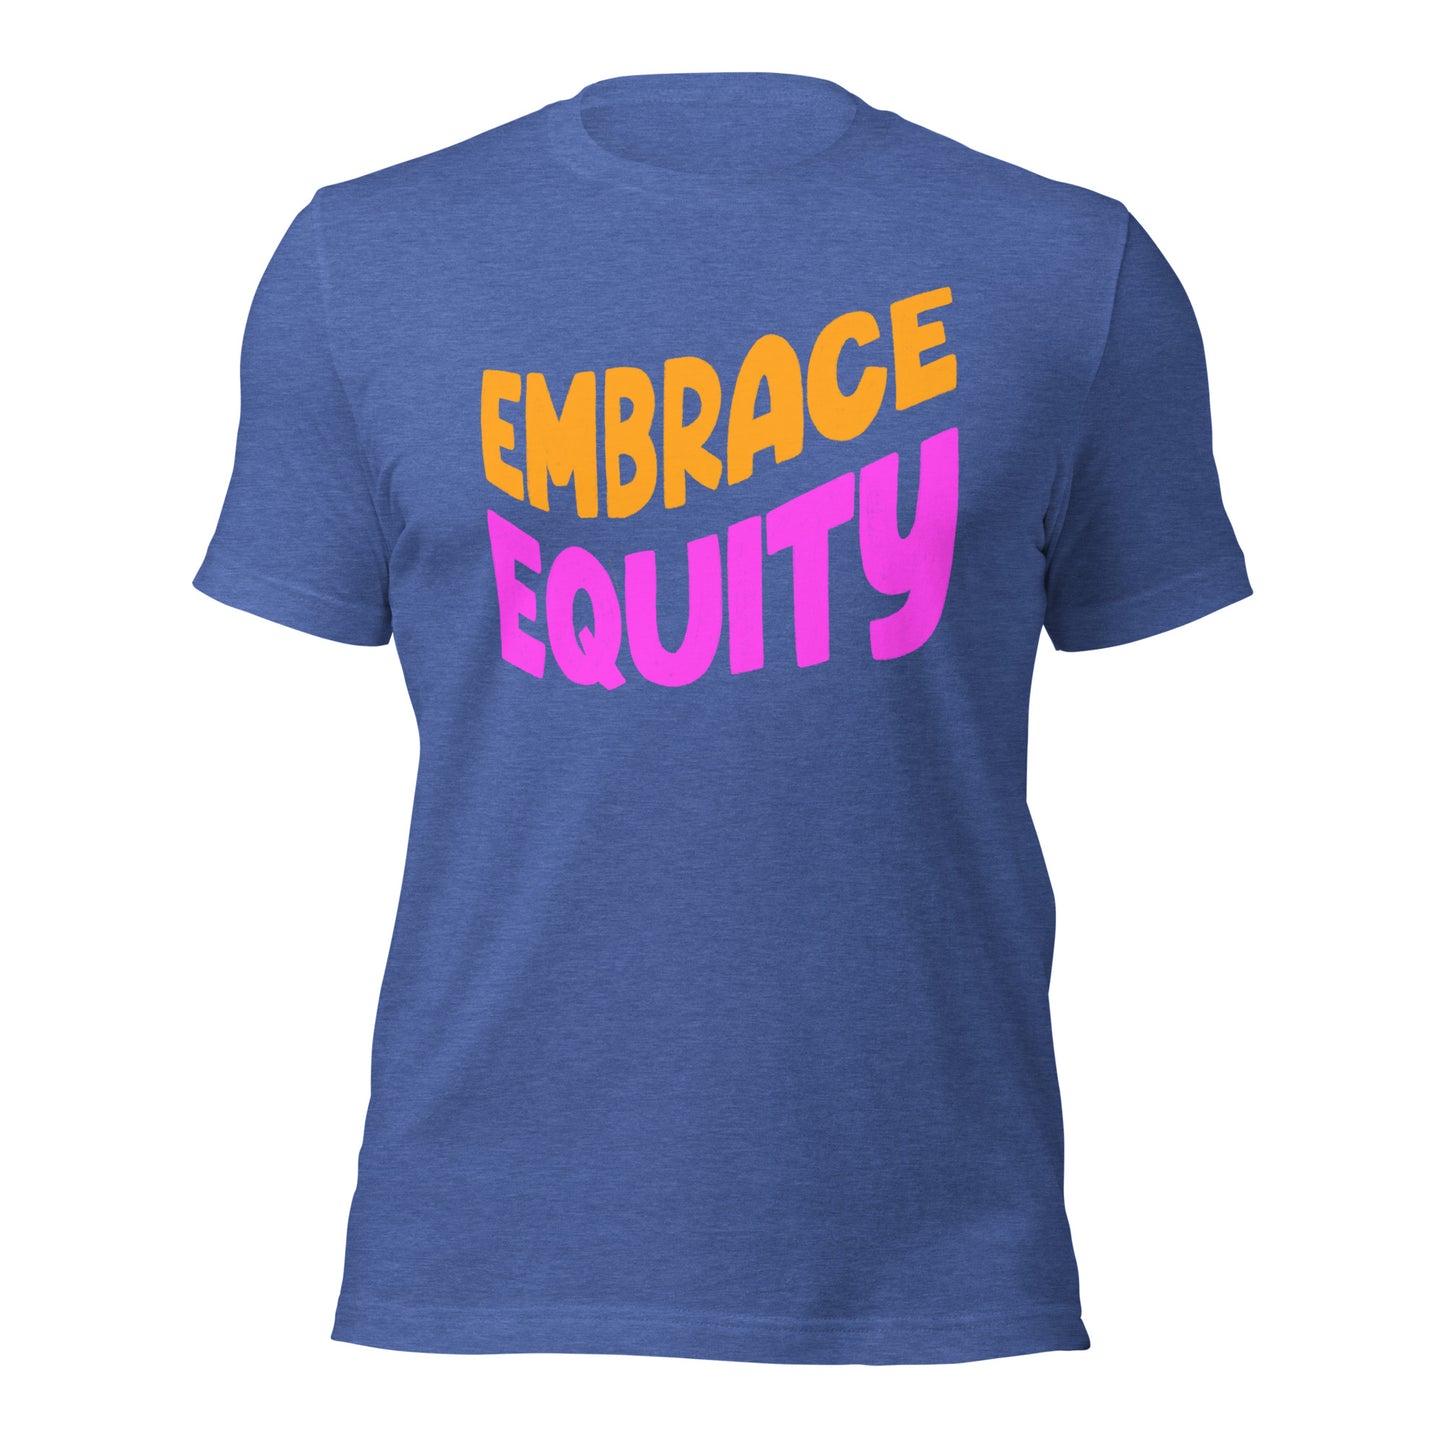 EMBRACE EQUITY Unisex t-shirt